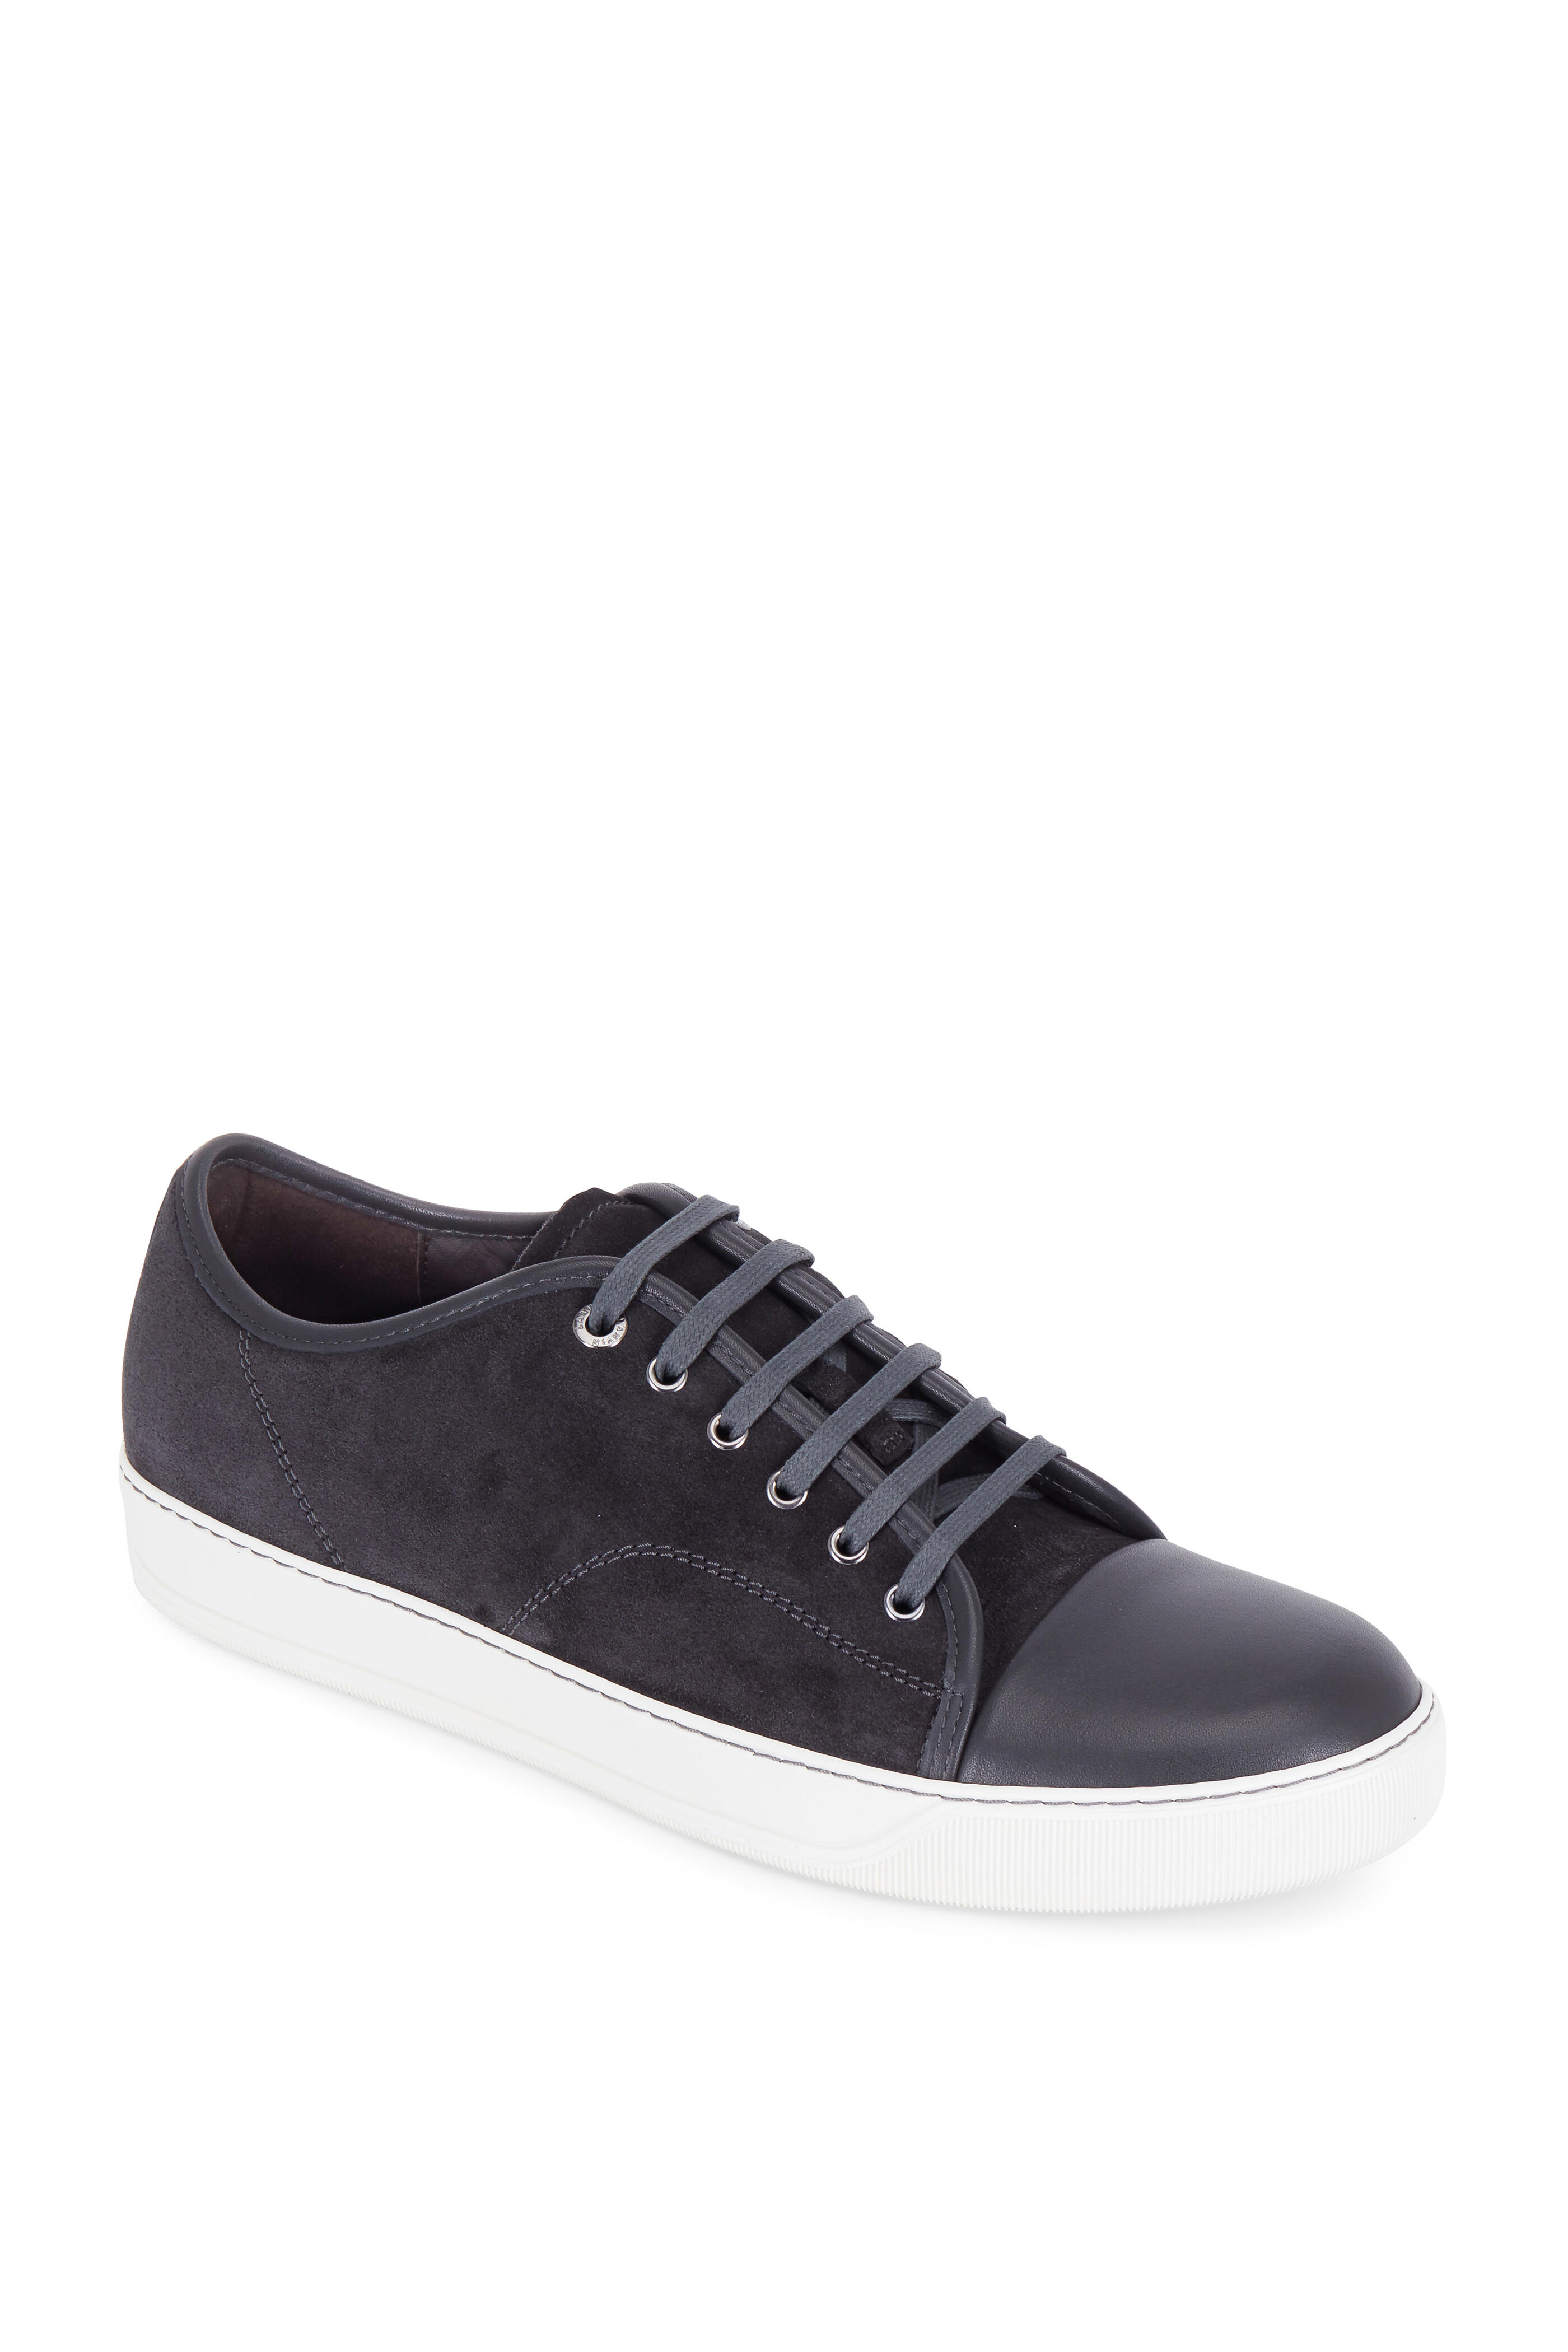 Lanvin - Asphalt Suede Cap-Toe Sneaker | Mitchell Stores